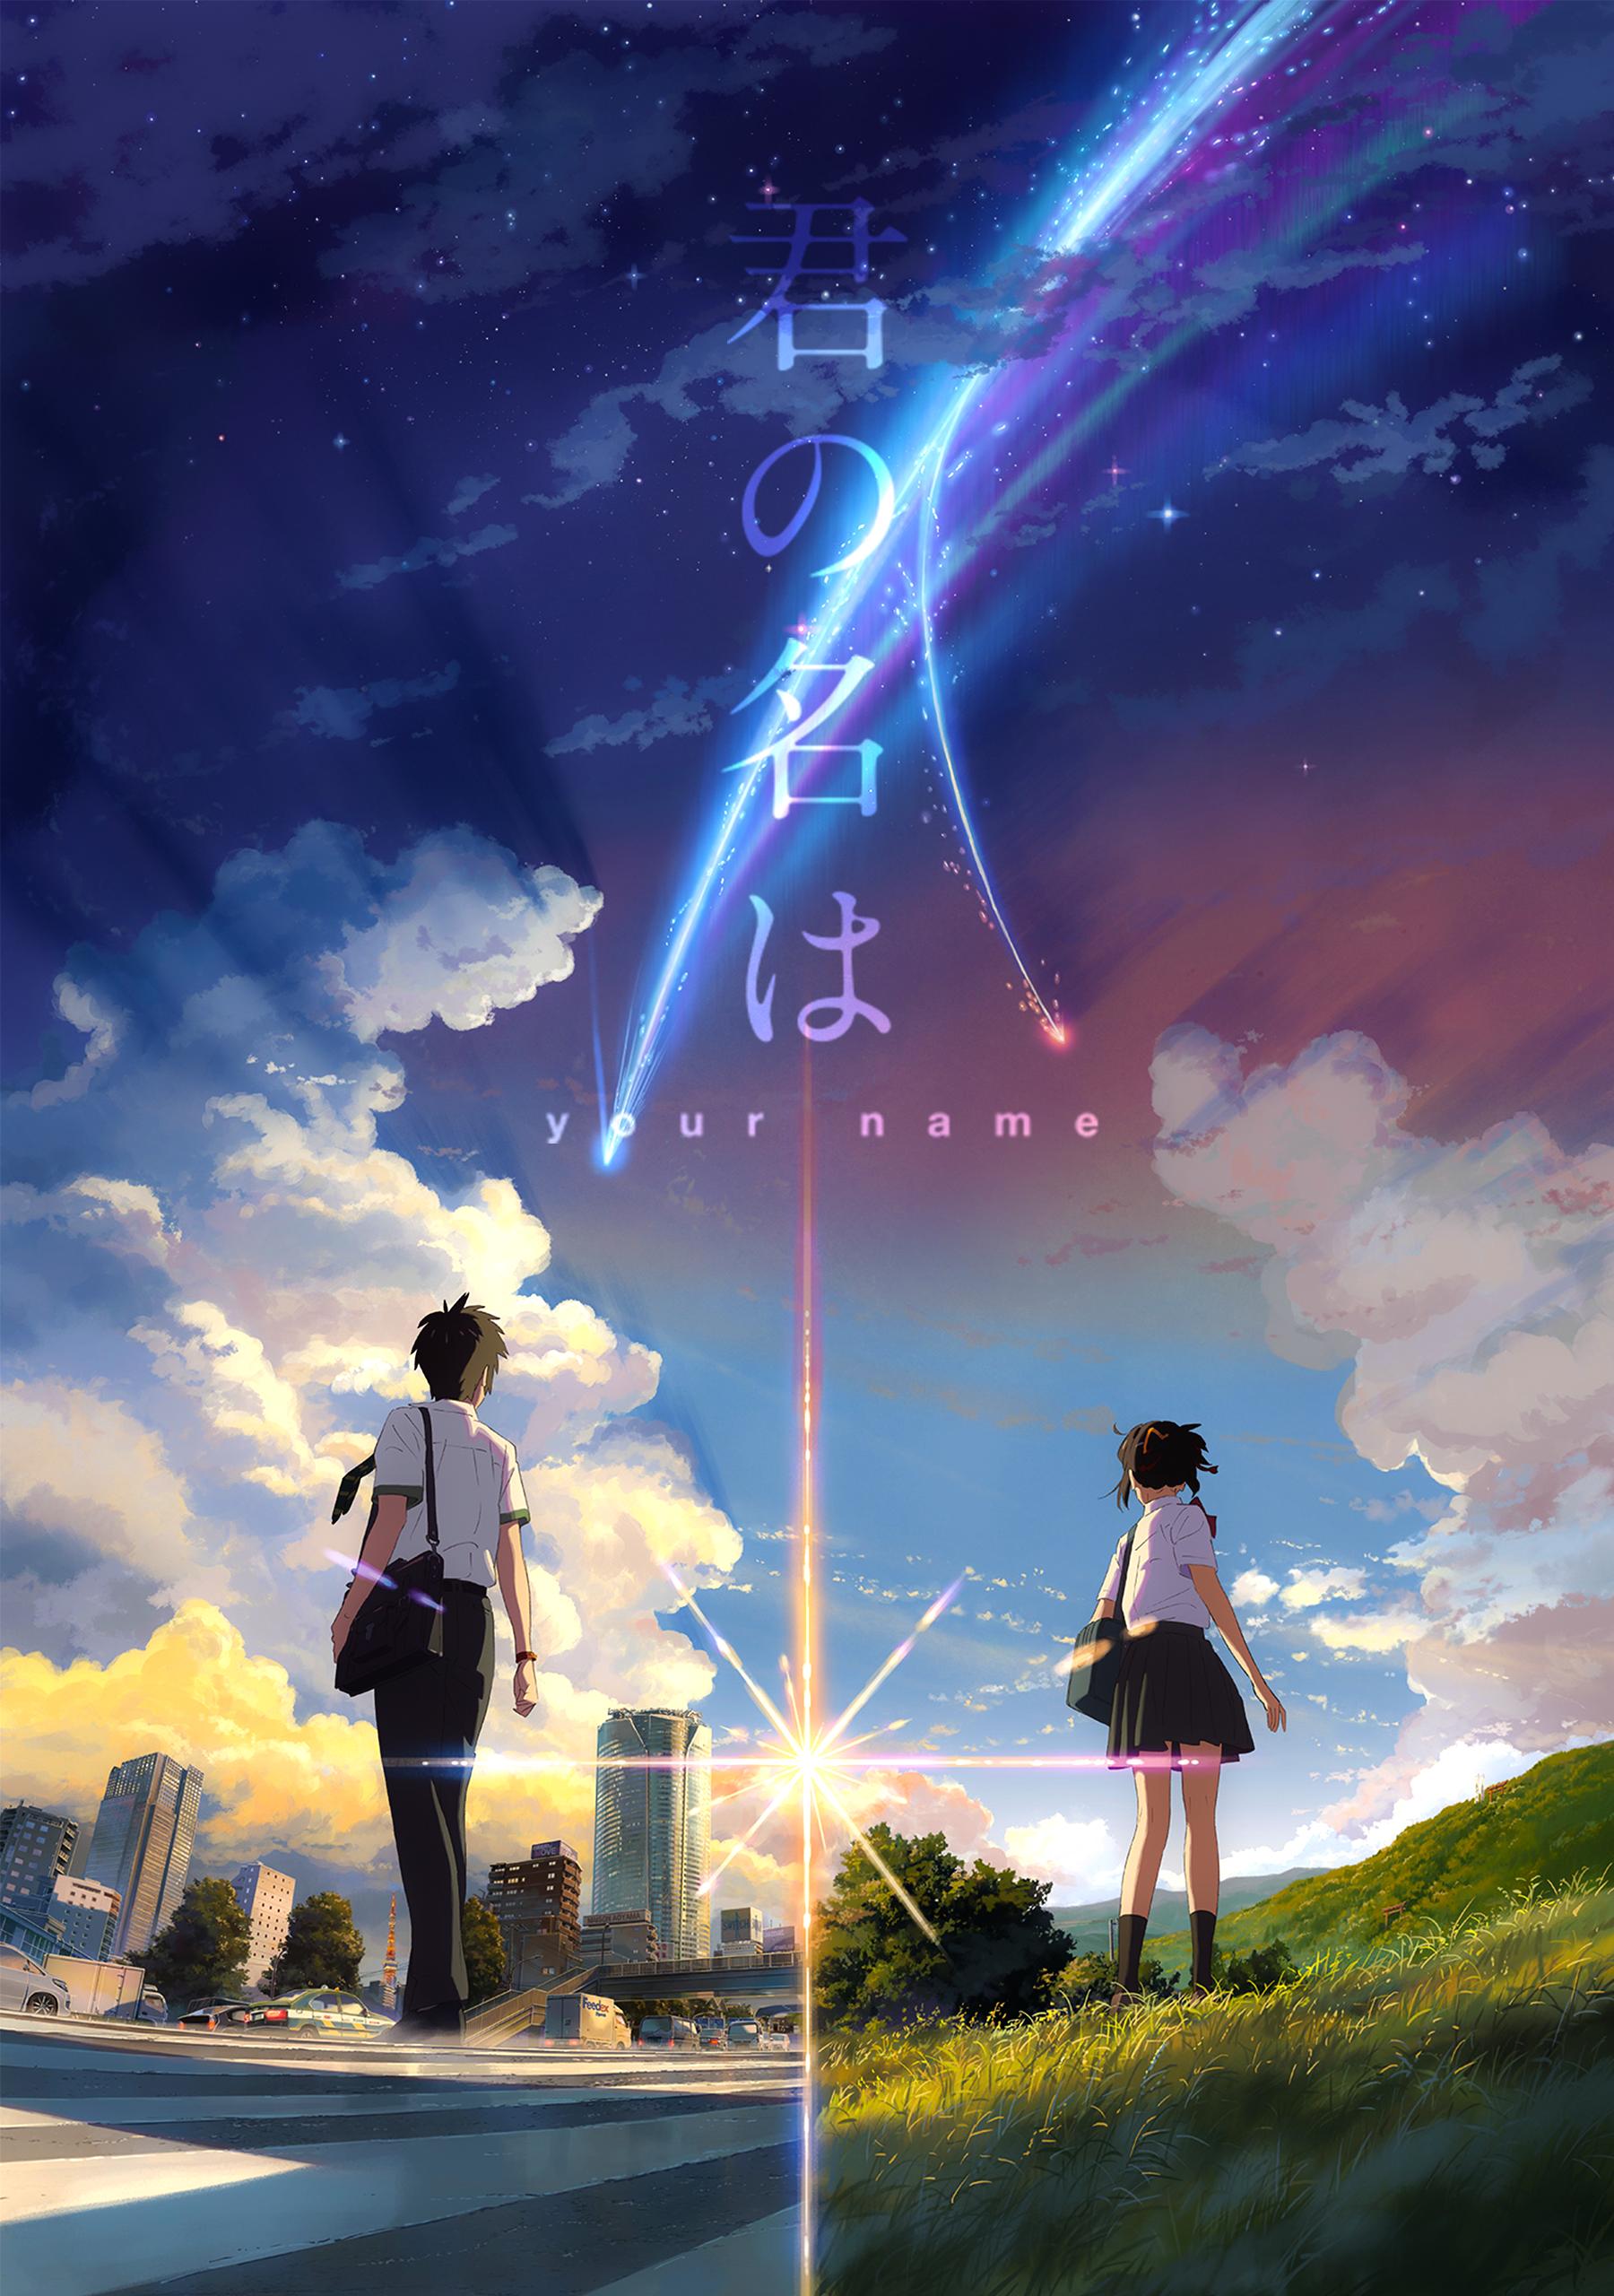 Kimi No Na, or Makoto Shinkai's (5cm per second and garden of words) new movie